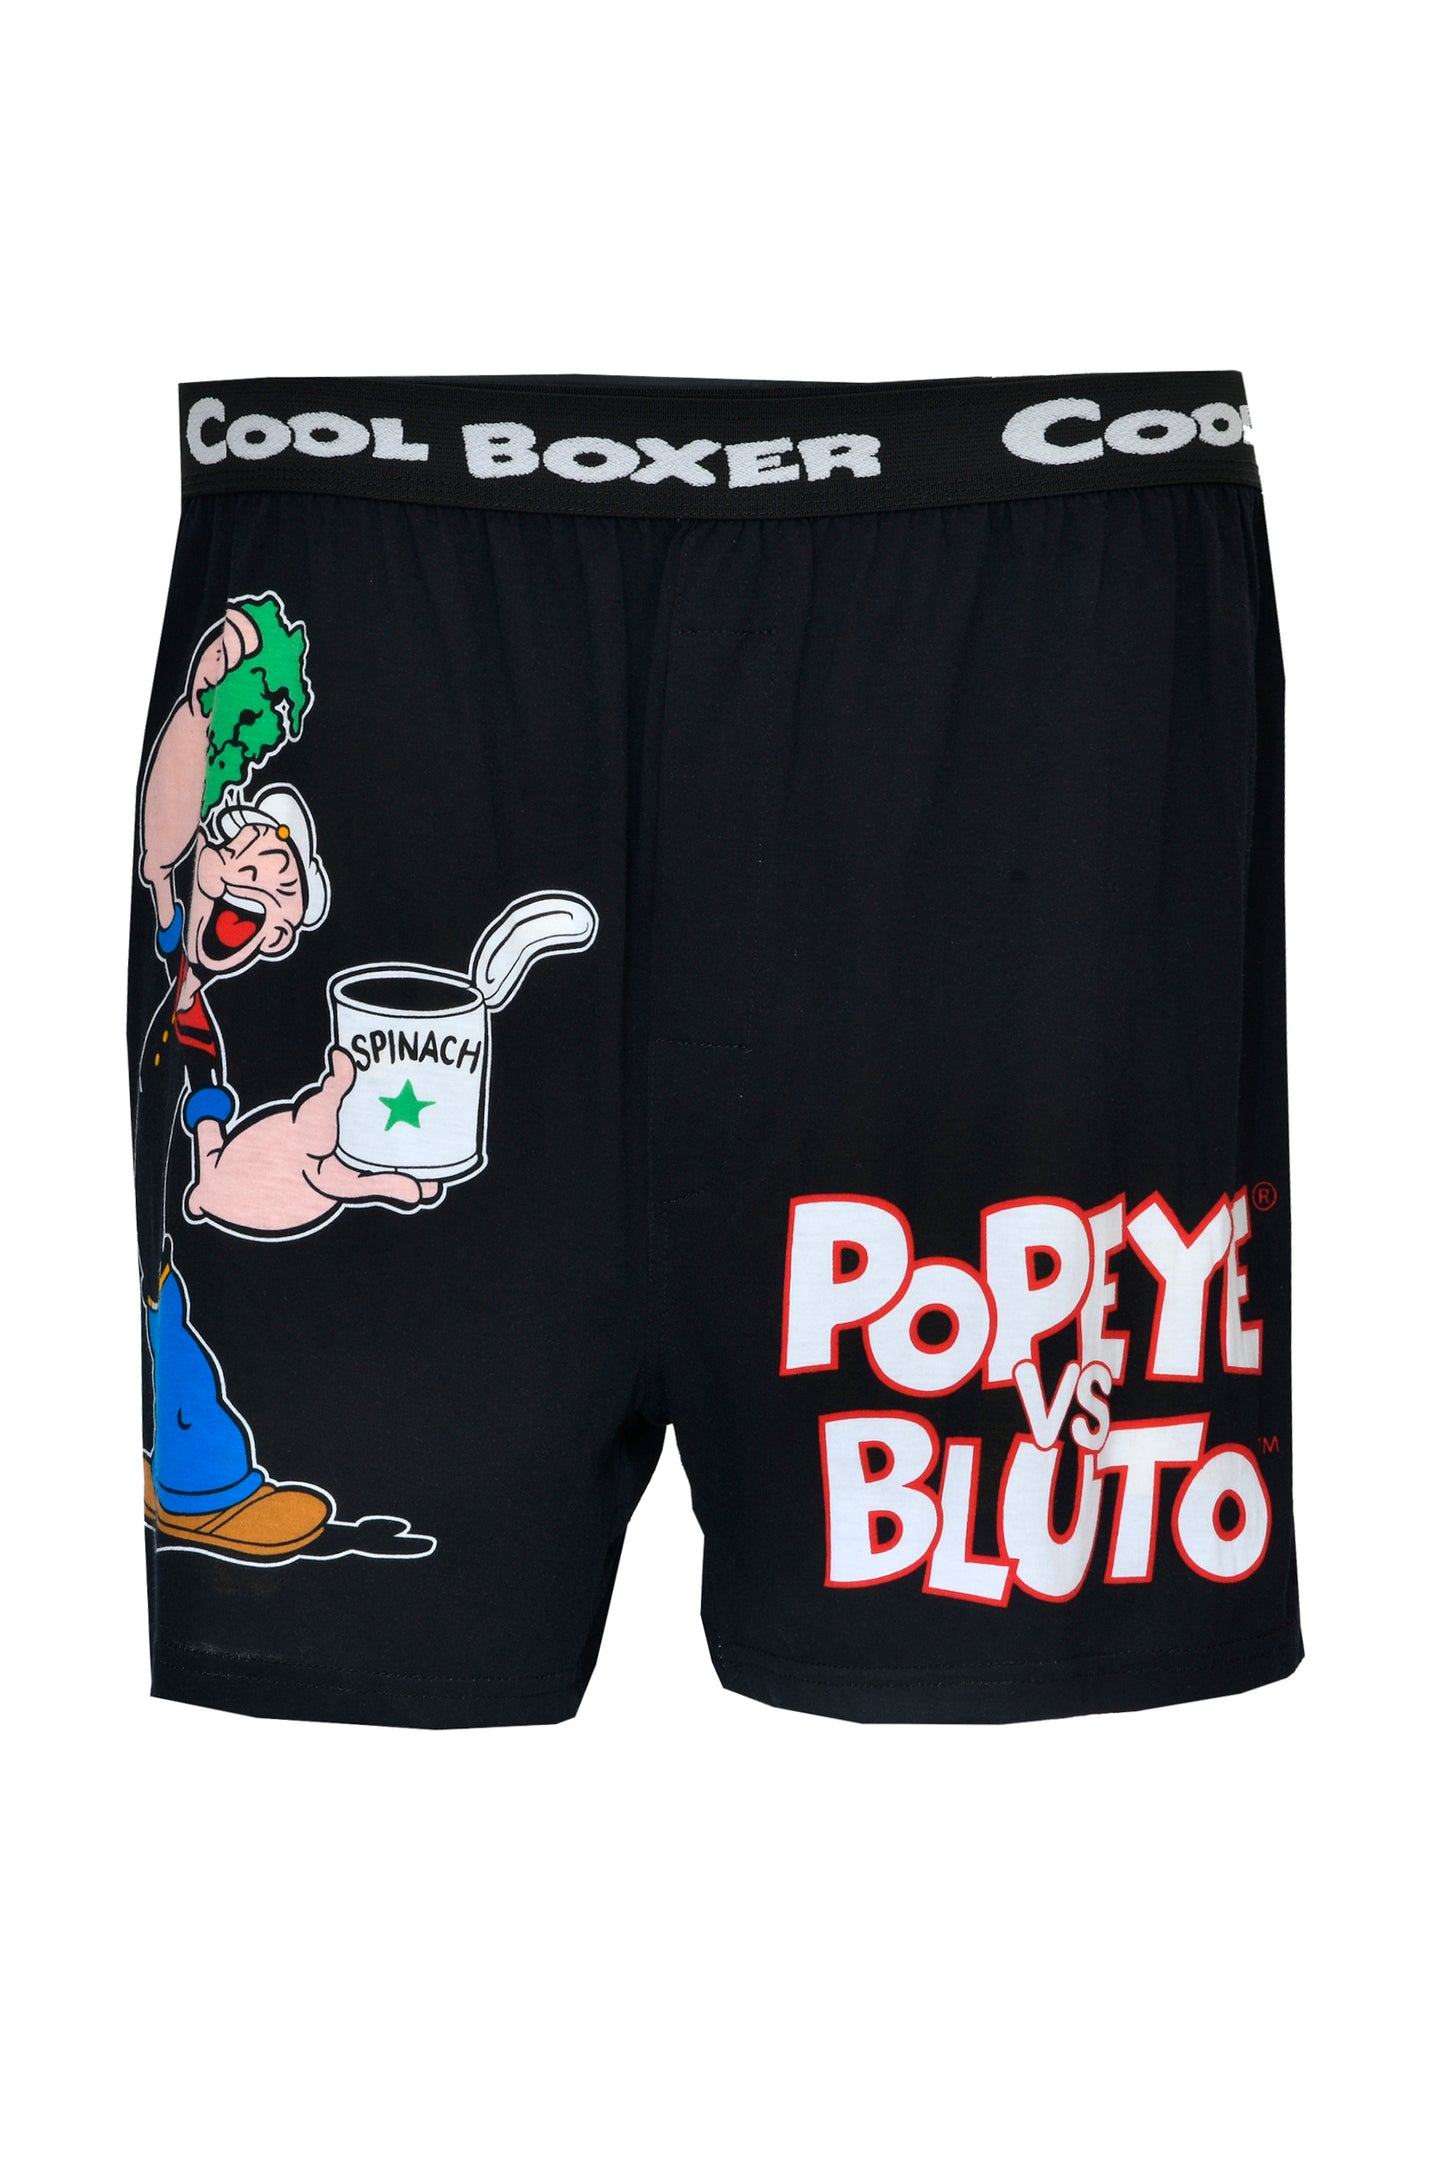 Men "POPEYE VS BLUTO" Cartoon Boxer